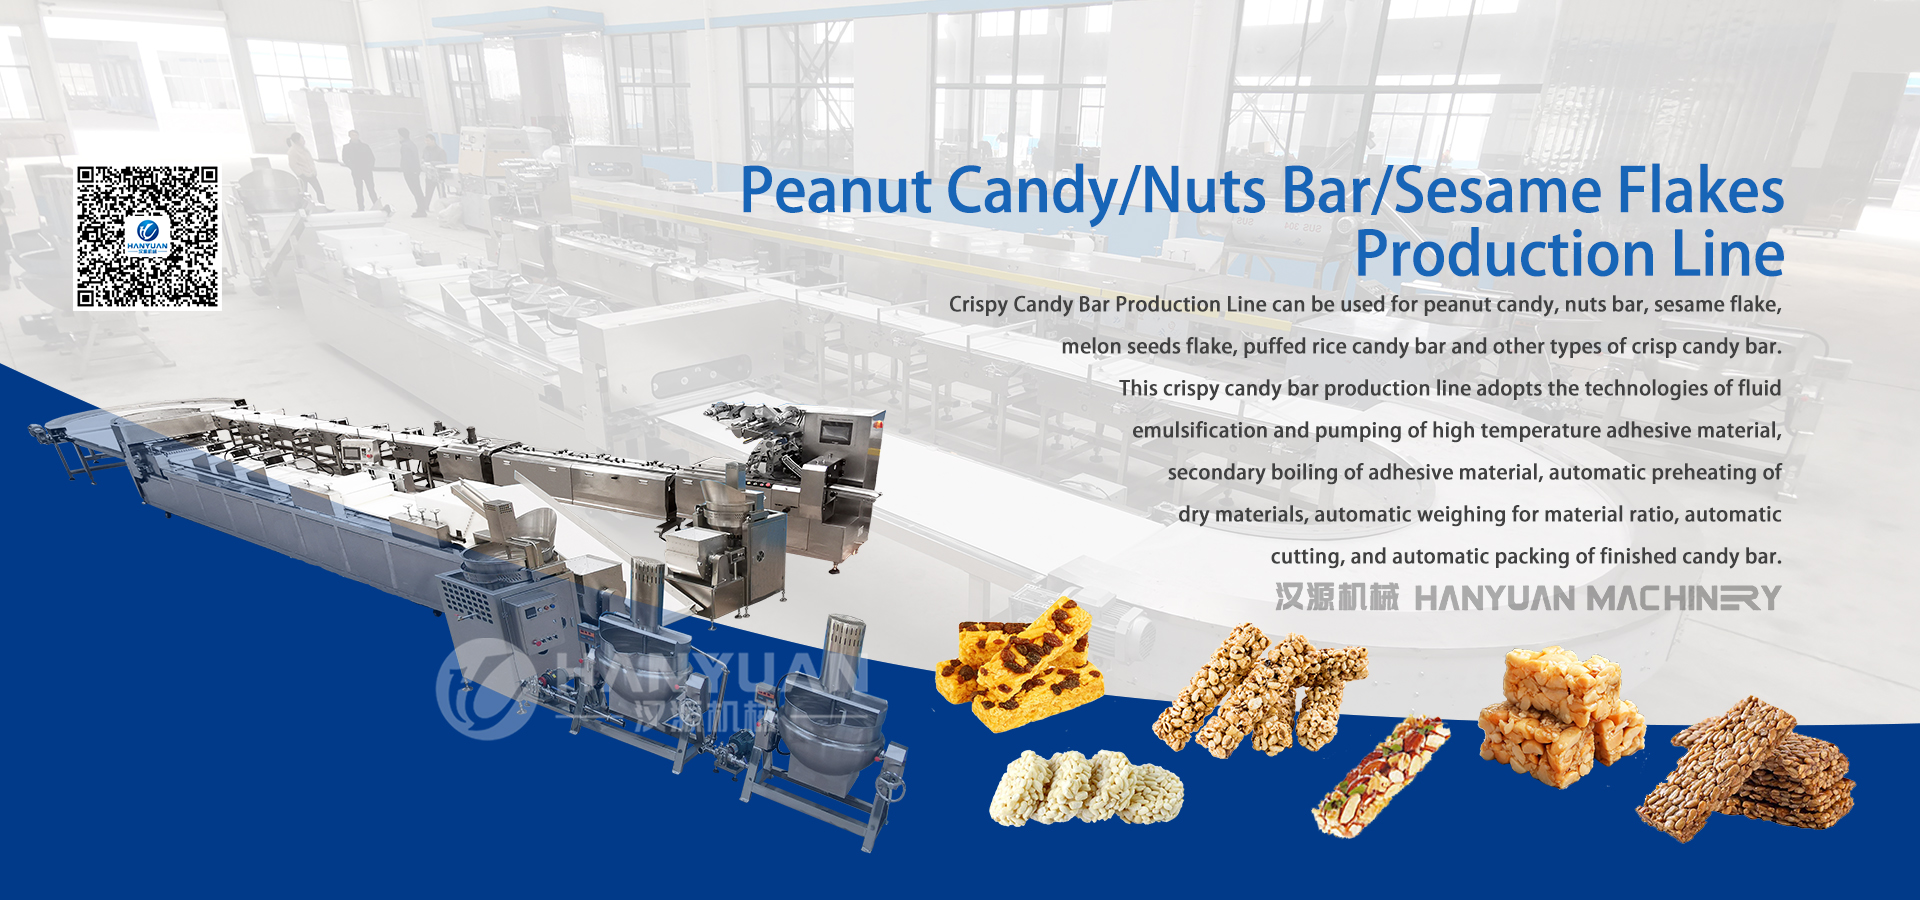 5.2 Peanut Candy Production Line